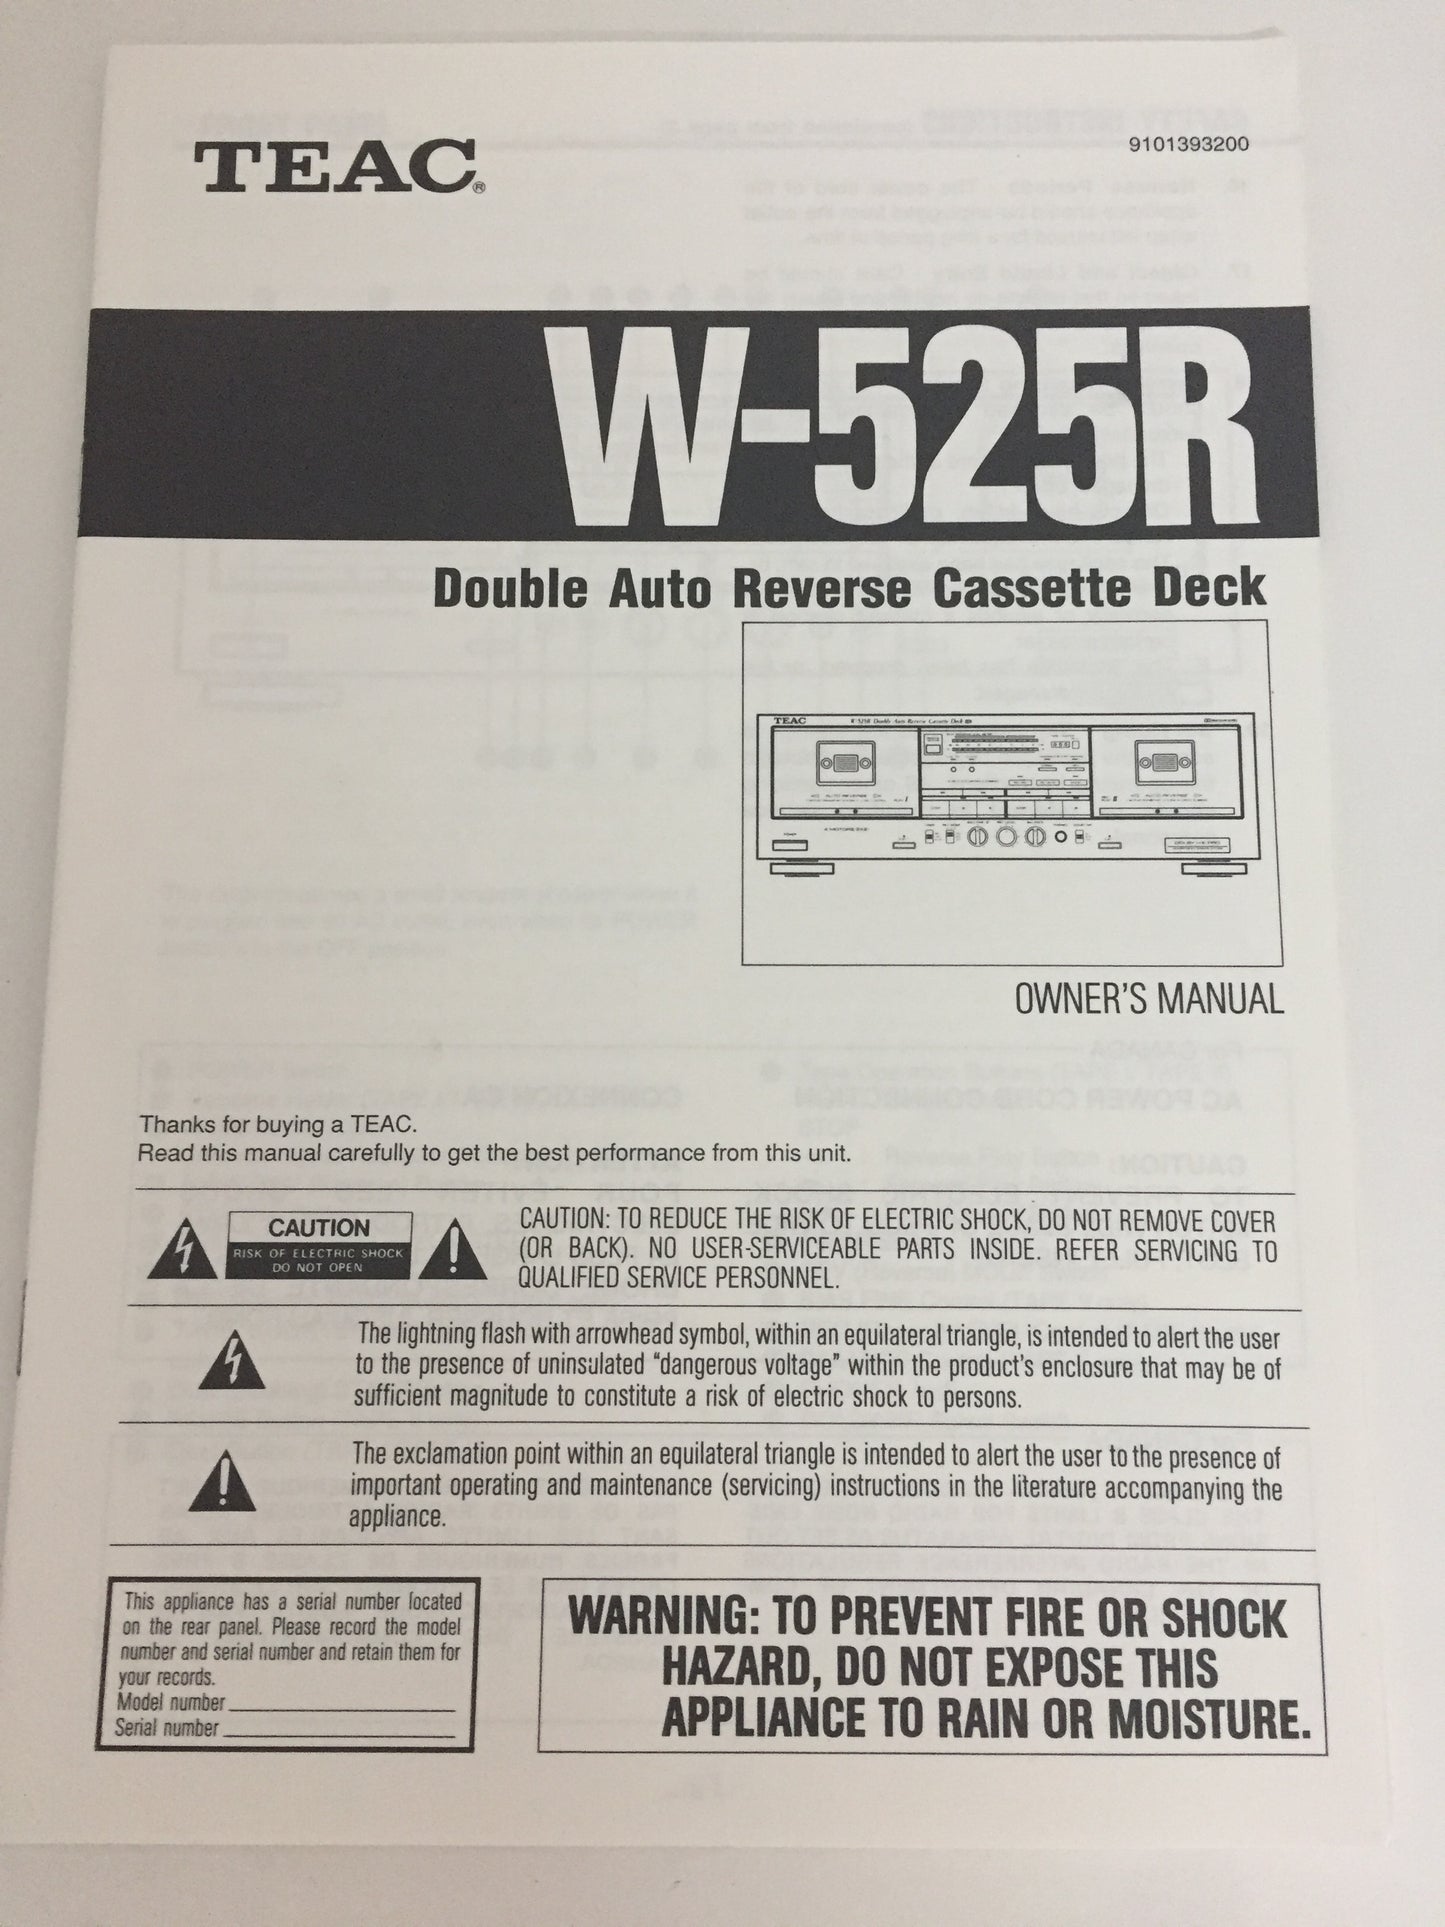 Teac W-525R Double Auto Reverse Cassette Deck Owner's Manual